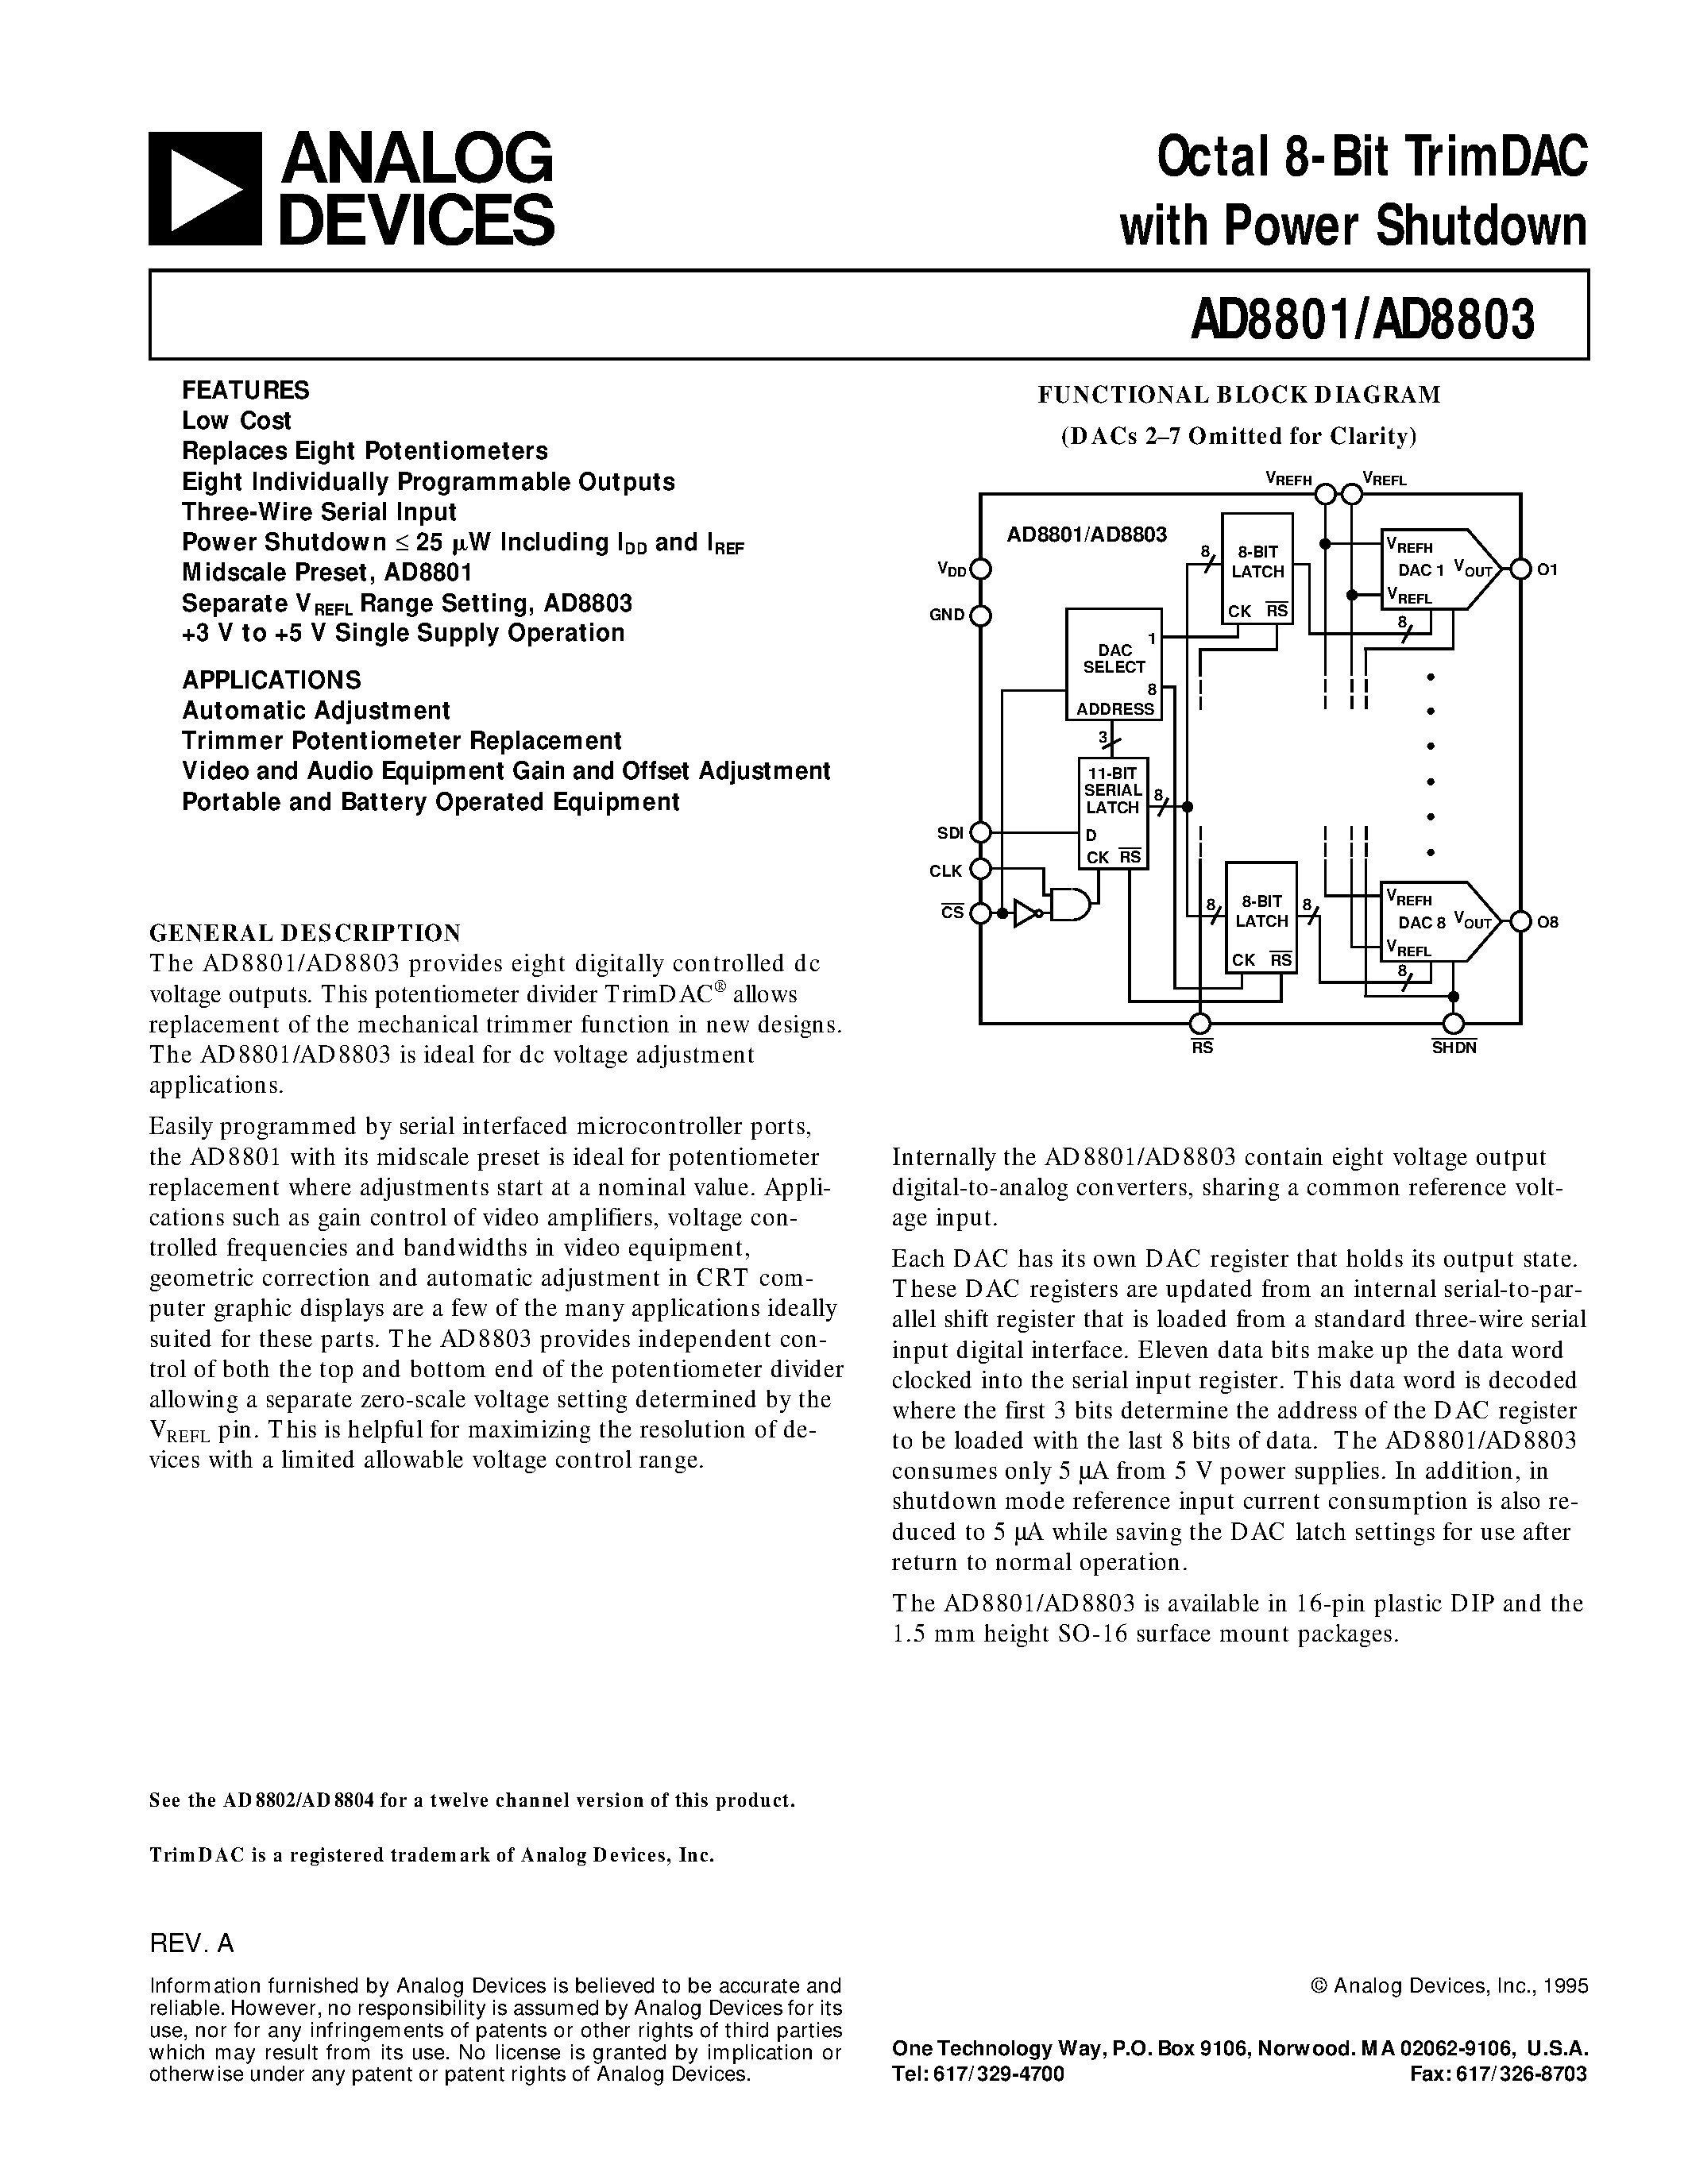 Даташит AD8803 - Octal 8-Bit TrimDAC with Power Shutdown страница 1